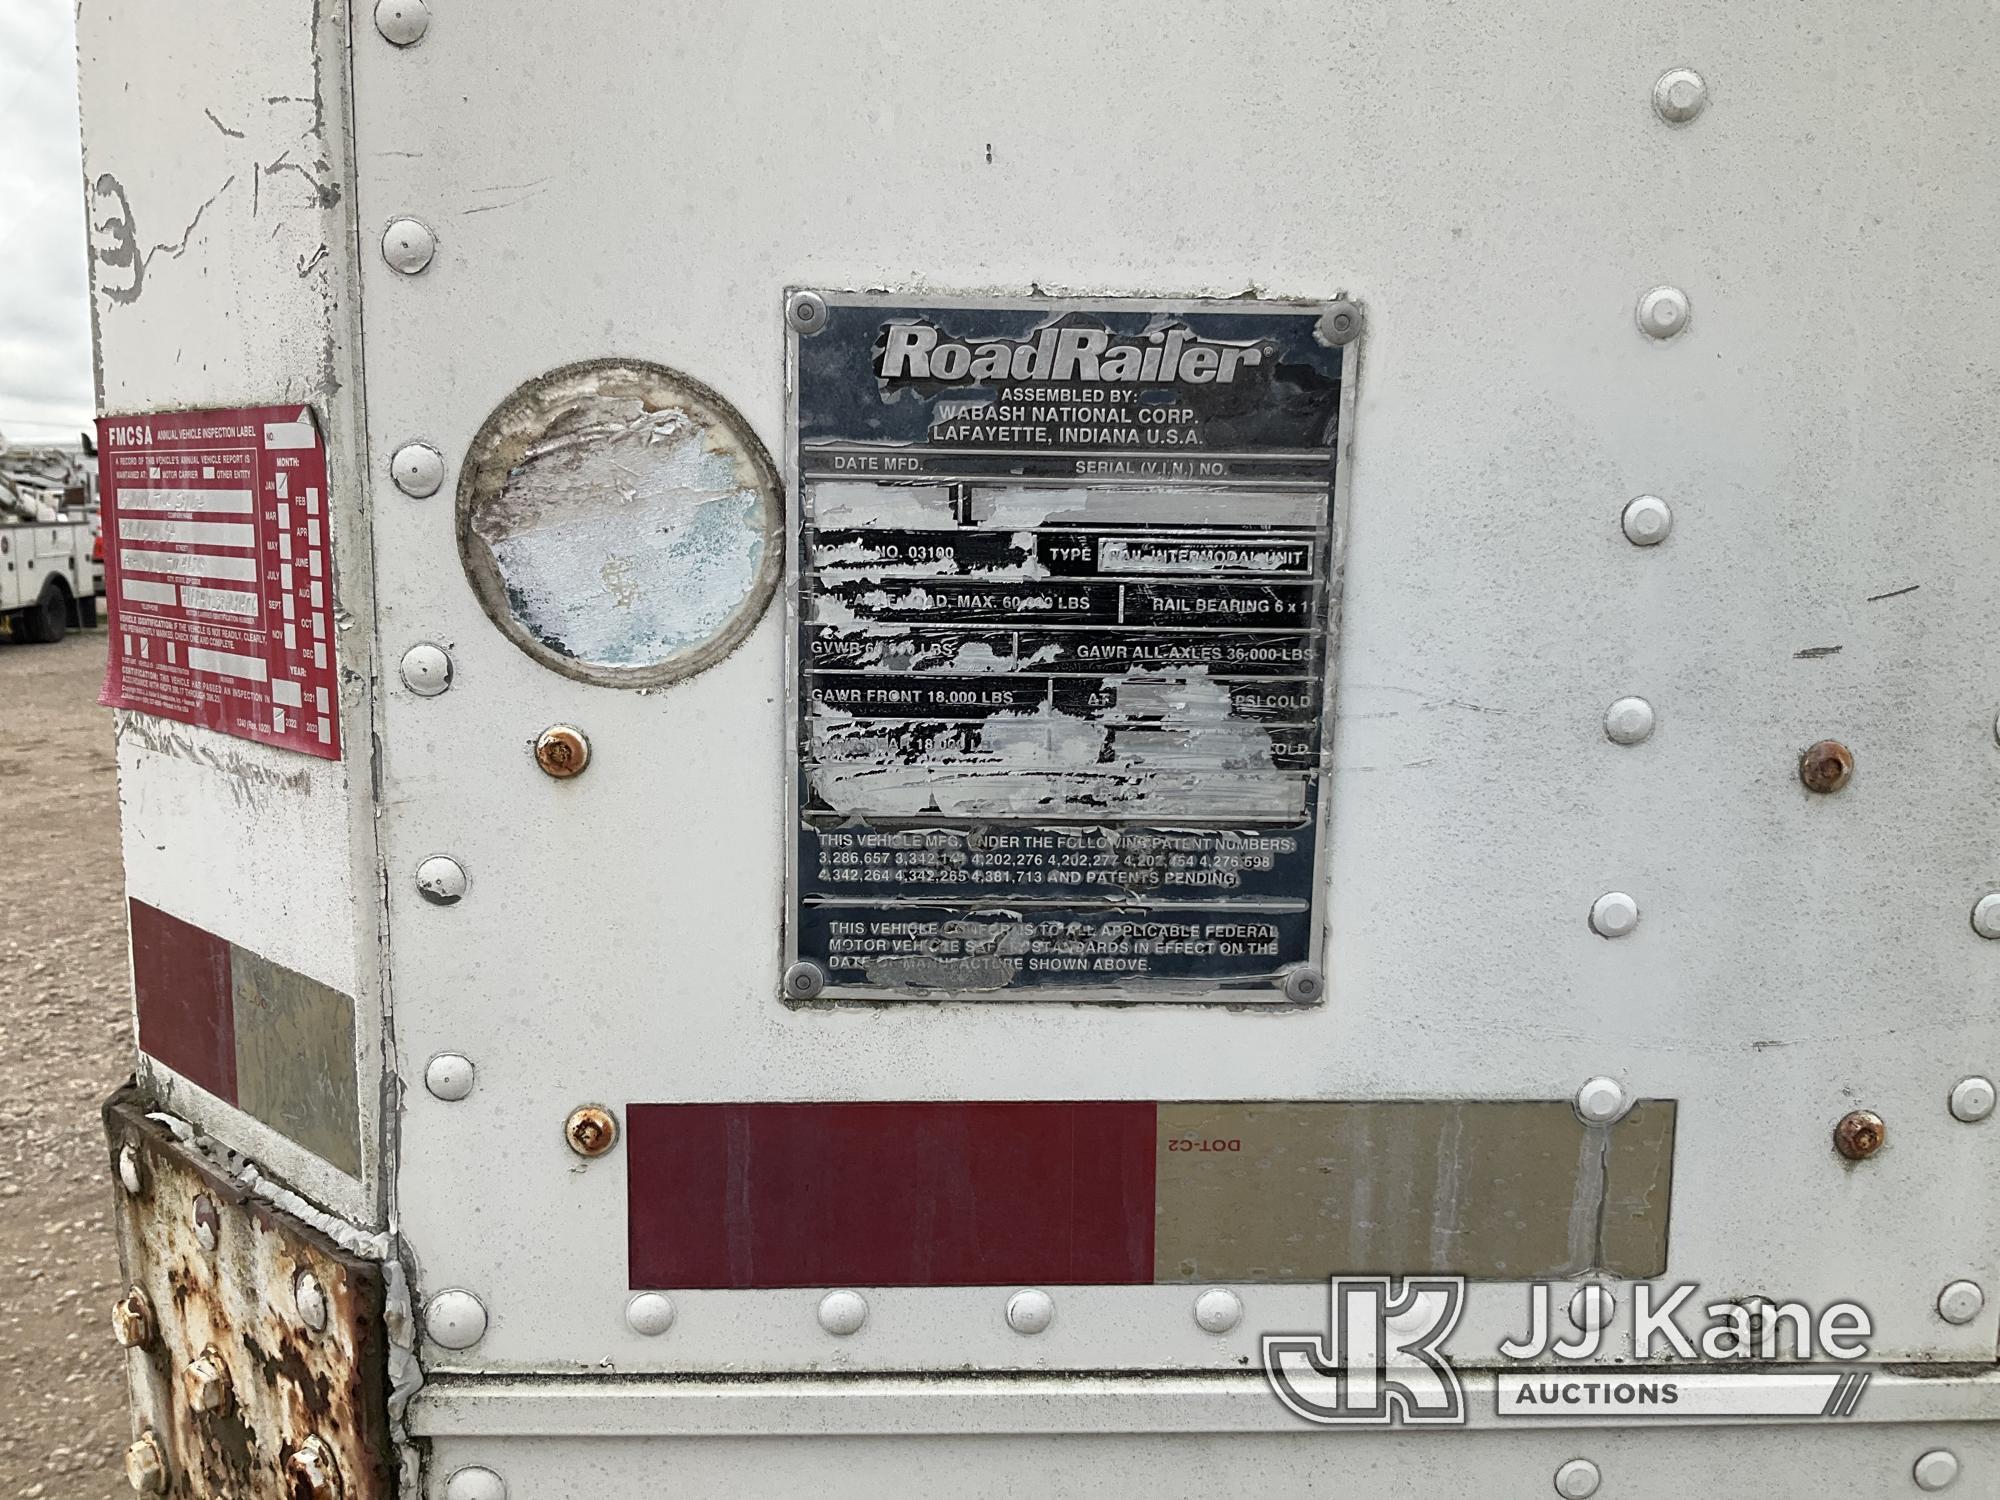 (Waxahachie, TX) 1987 RoadRailer Van Body Trailer Fair) (Seller States: Unit has not moved in a long